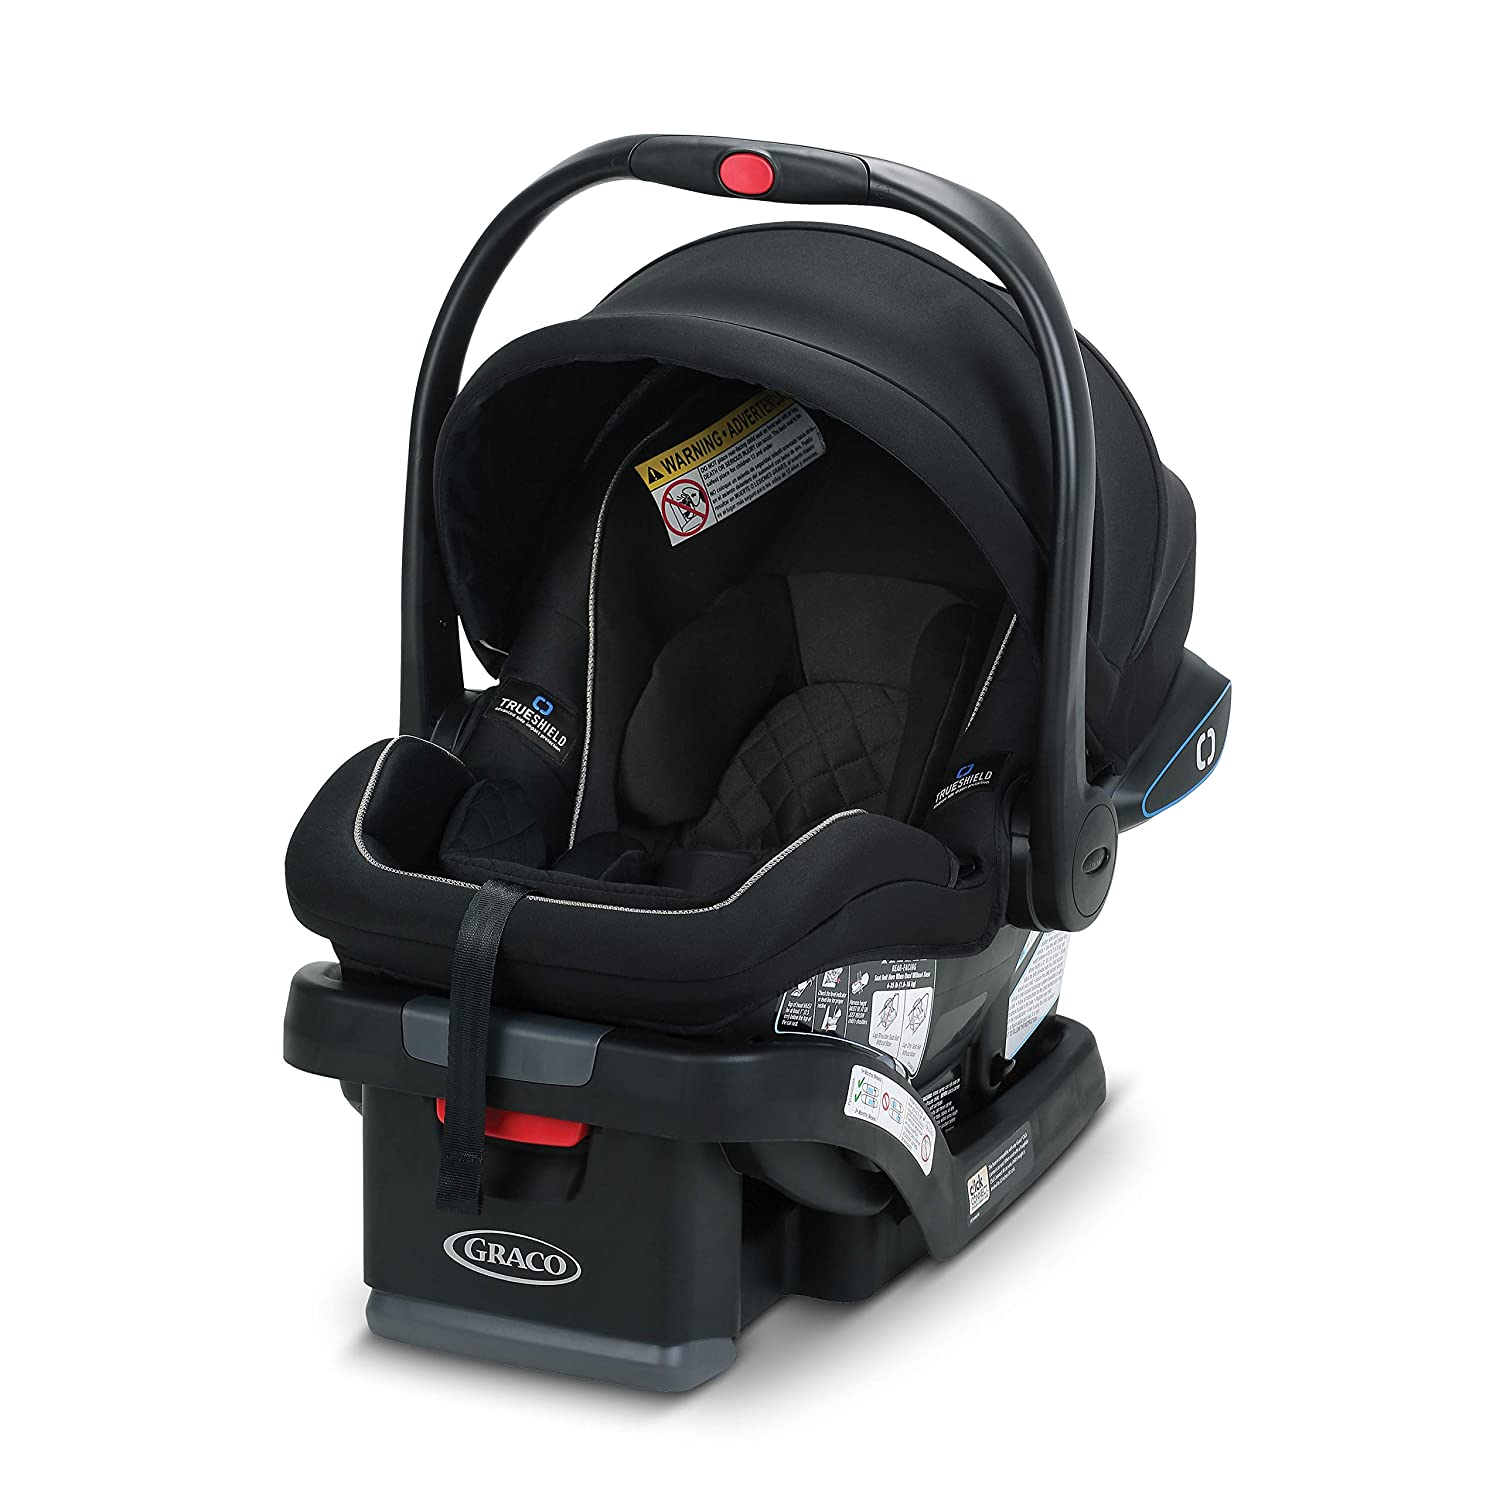  10. Graco Infant Car Seat with TrueShield Technology, SnugRide SnugLock 35 LX 